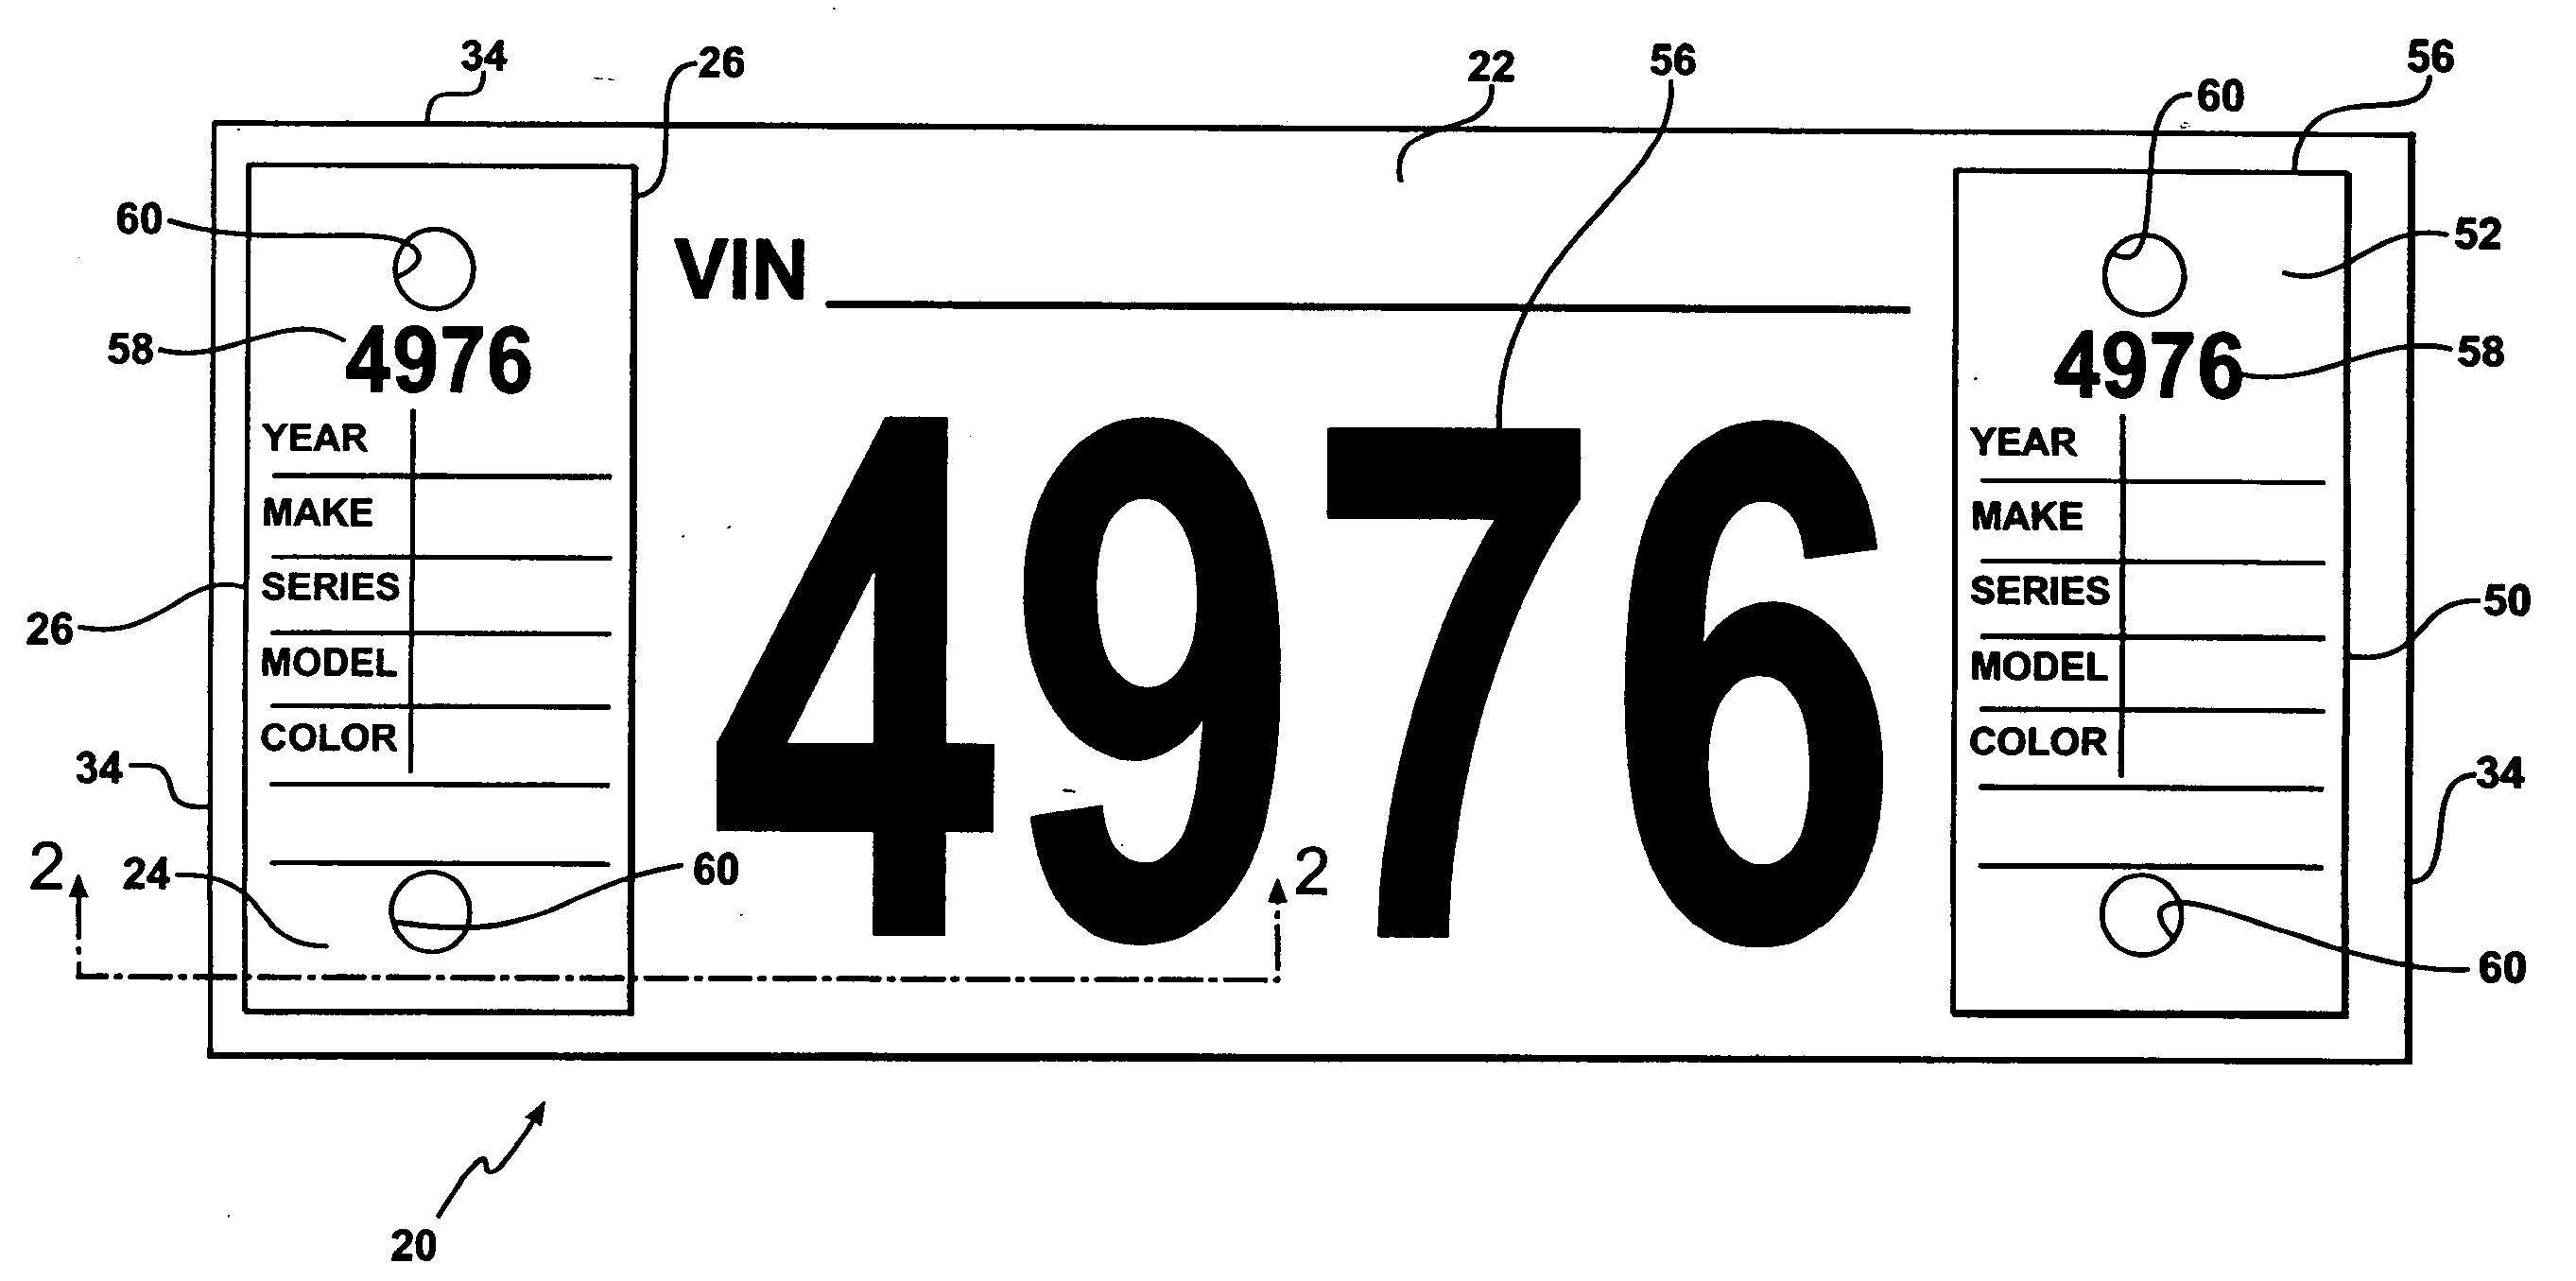 Vehicle inventory sticker form